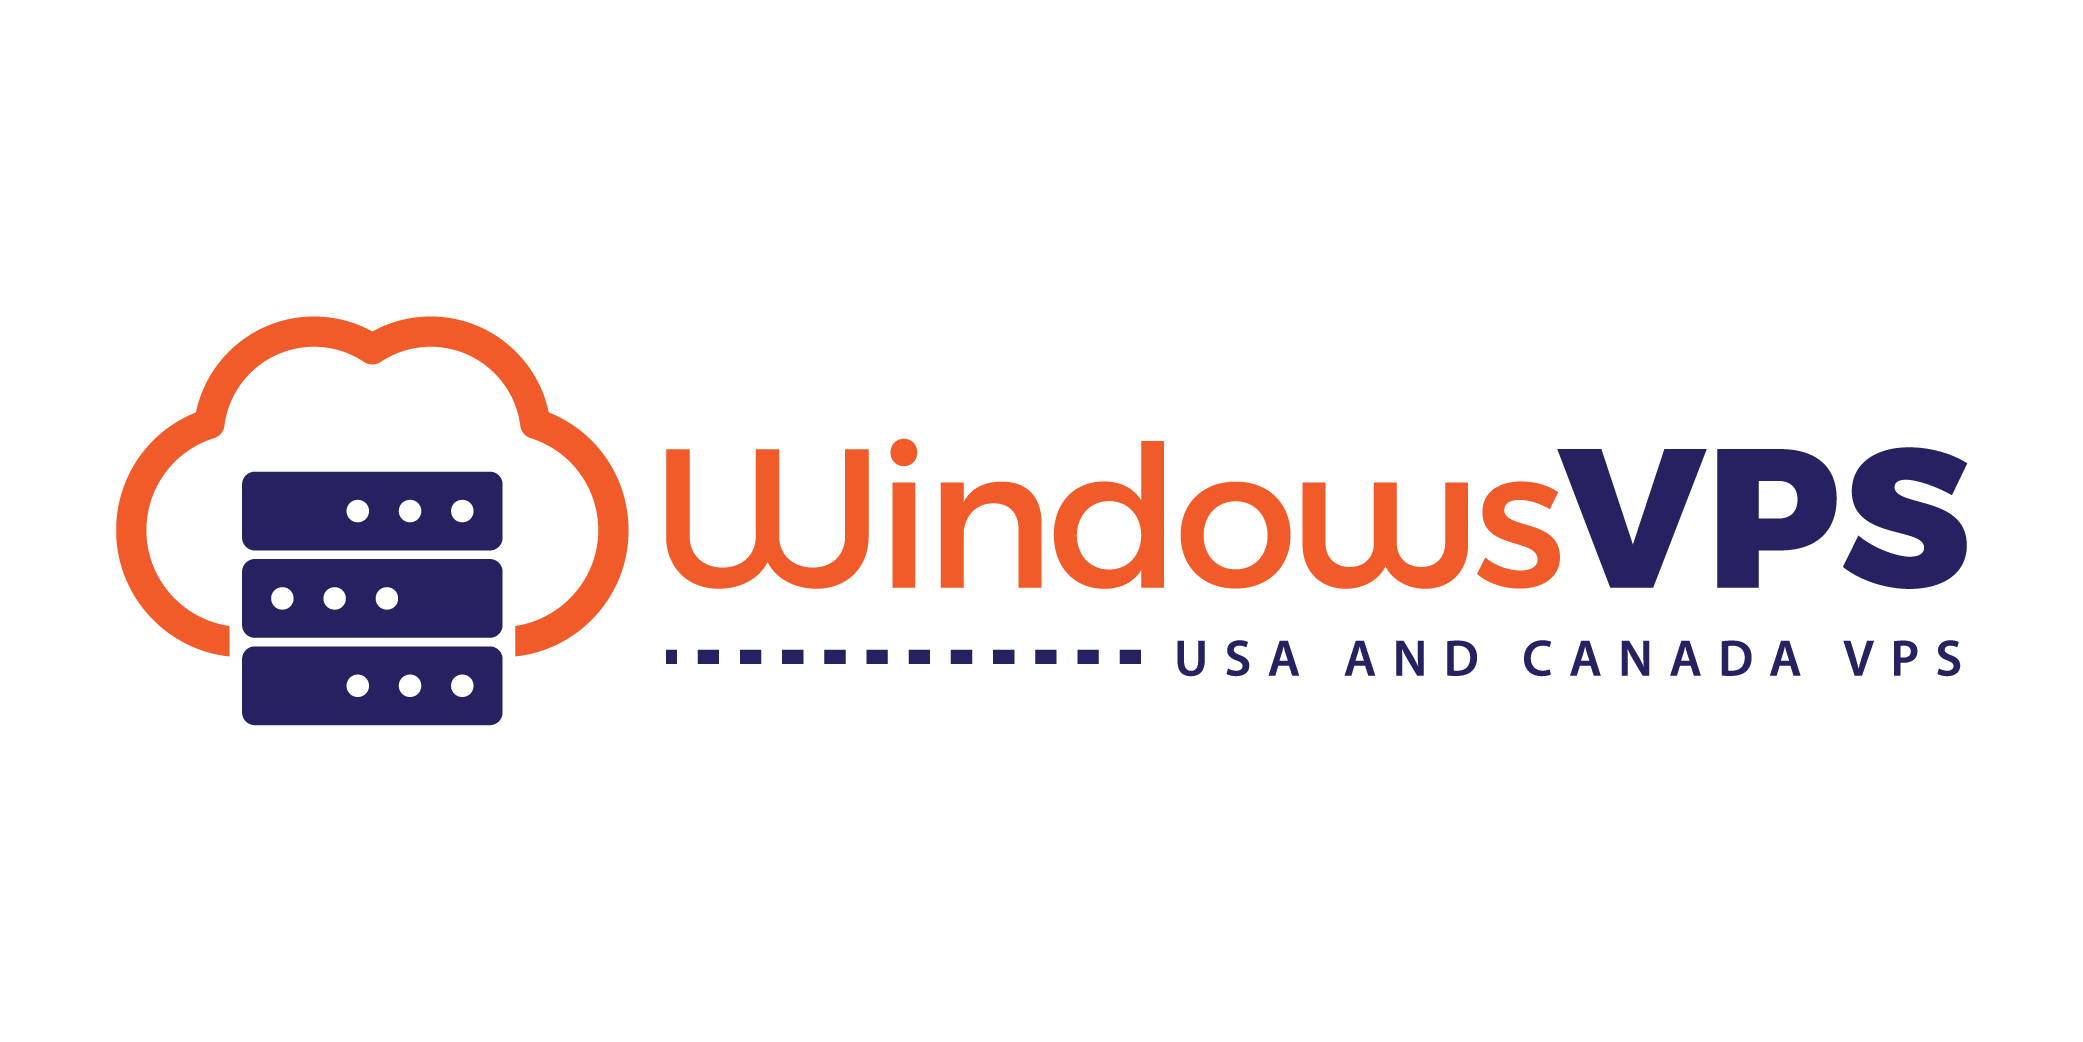 Windows VPS - Cheap Windows VPS Hosting in Canada & USA